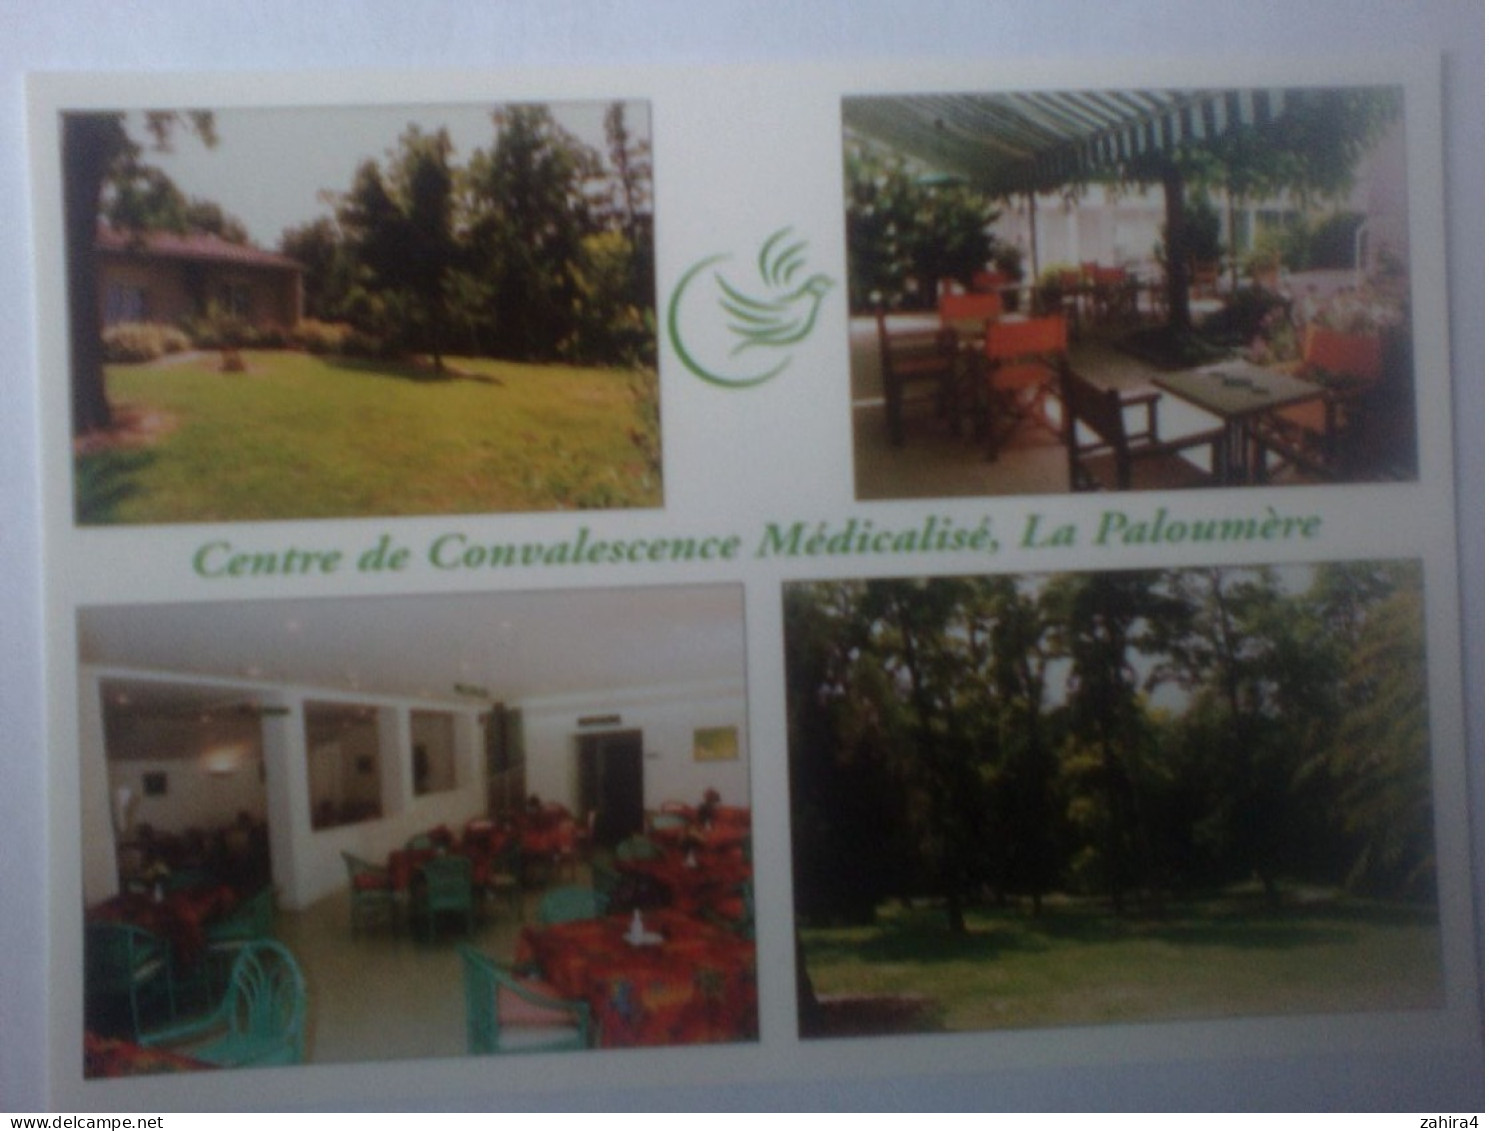 Centre De Convalescence Médicalisé, La Paloumère - Cap Du Bosc Damazan - Studio Christian Aiguillon - Damazan